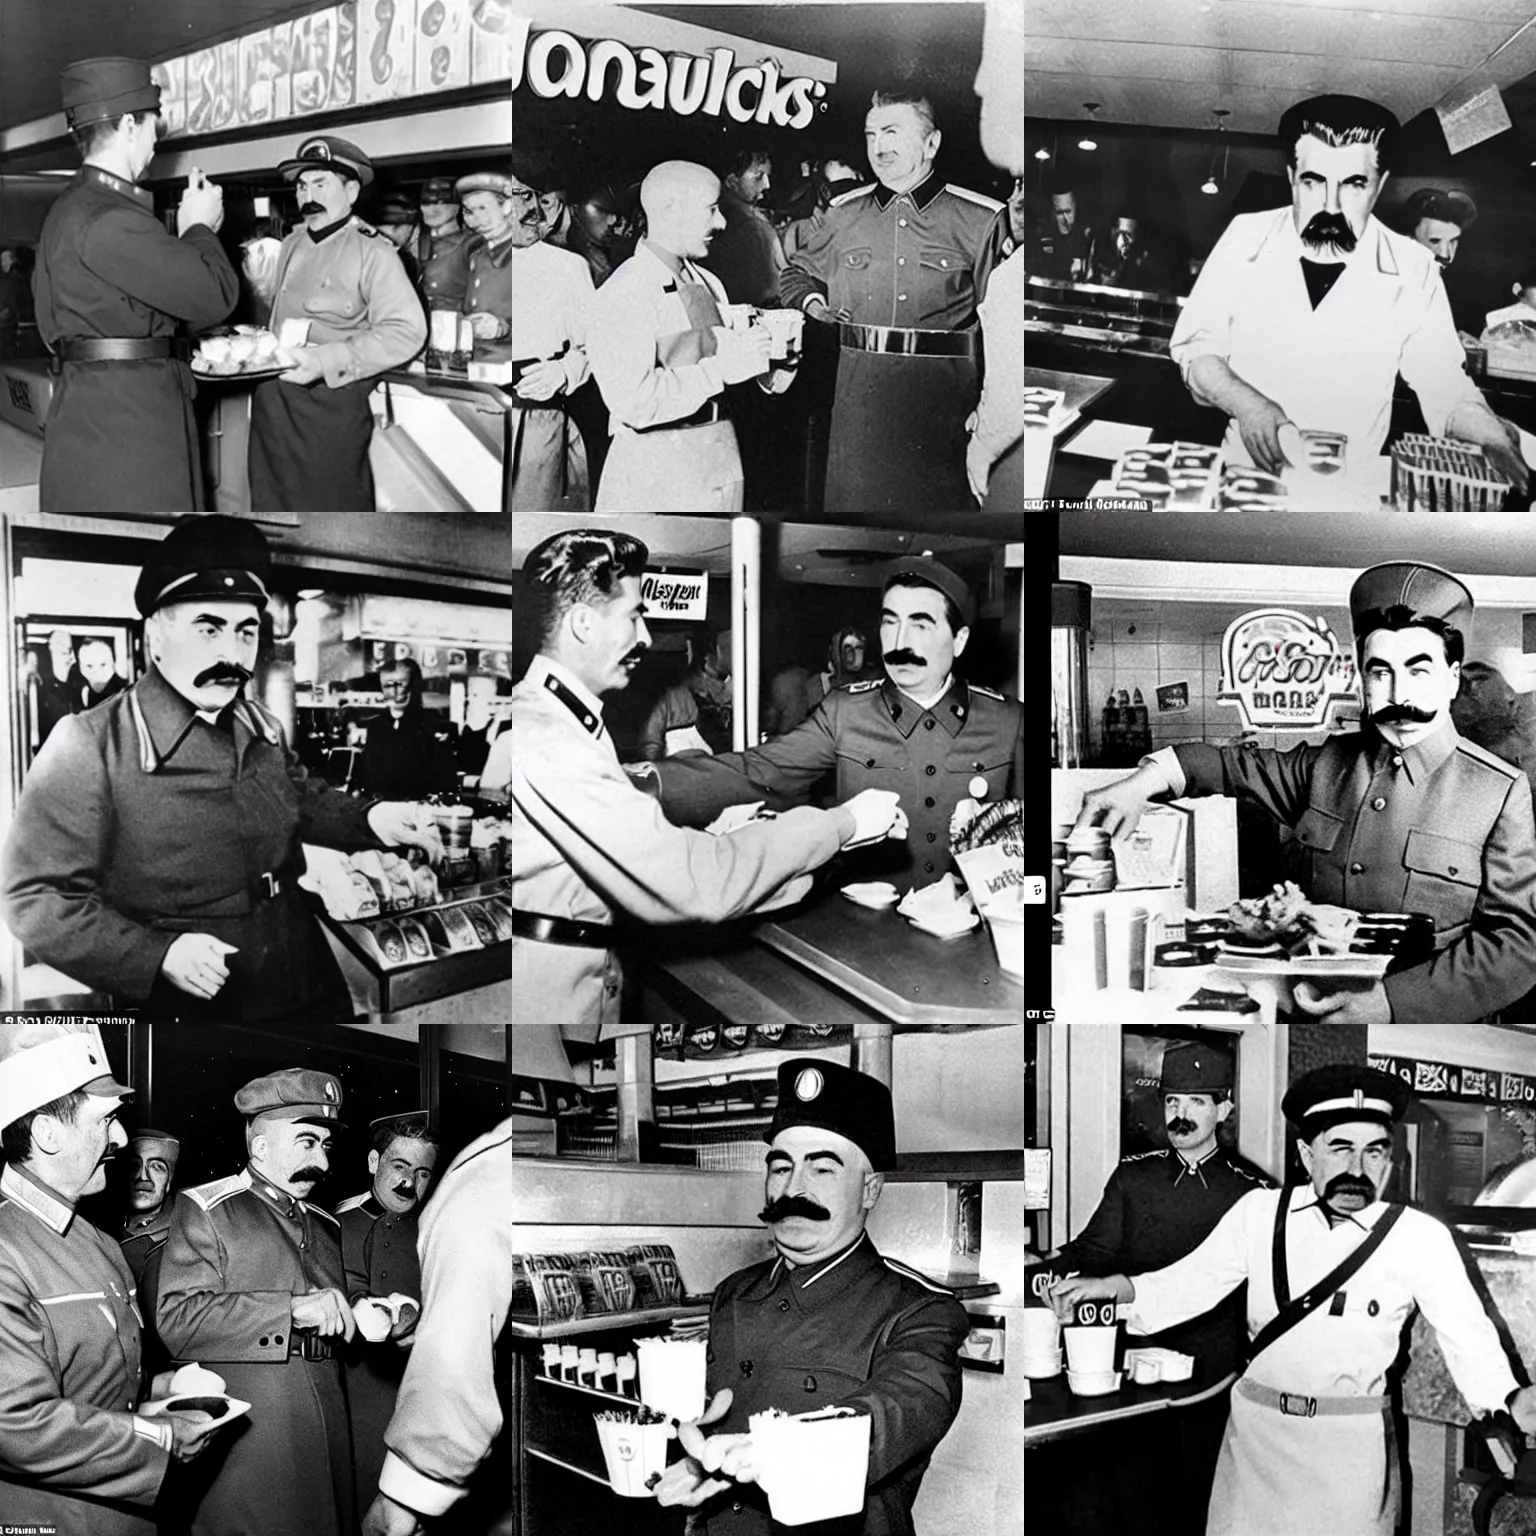 Prompt: Joseph Stalin working a shift at a fast-food restaurant serving customers, mcdonalds, burger king